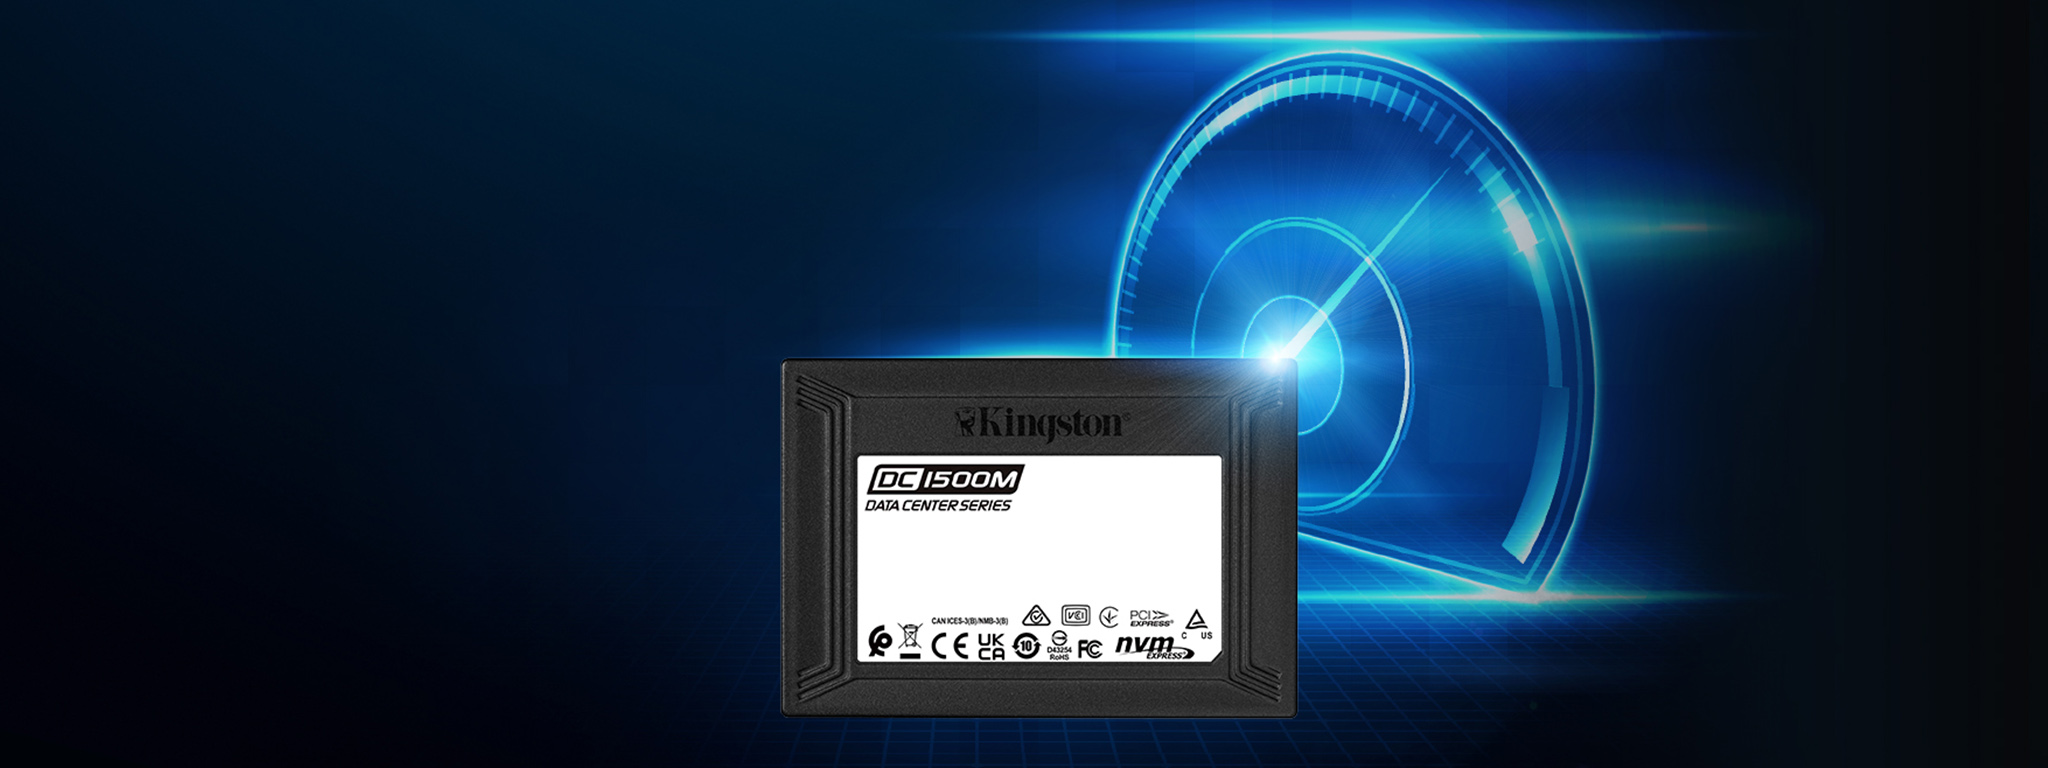 Kingston DC1500M SSD 固態硬碟位於表現高速意象的藍色發光速度表前面